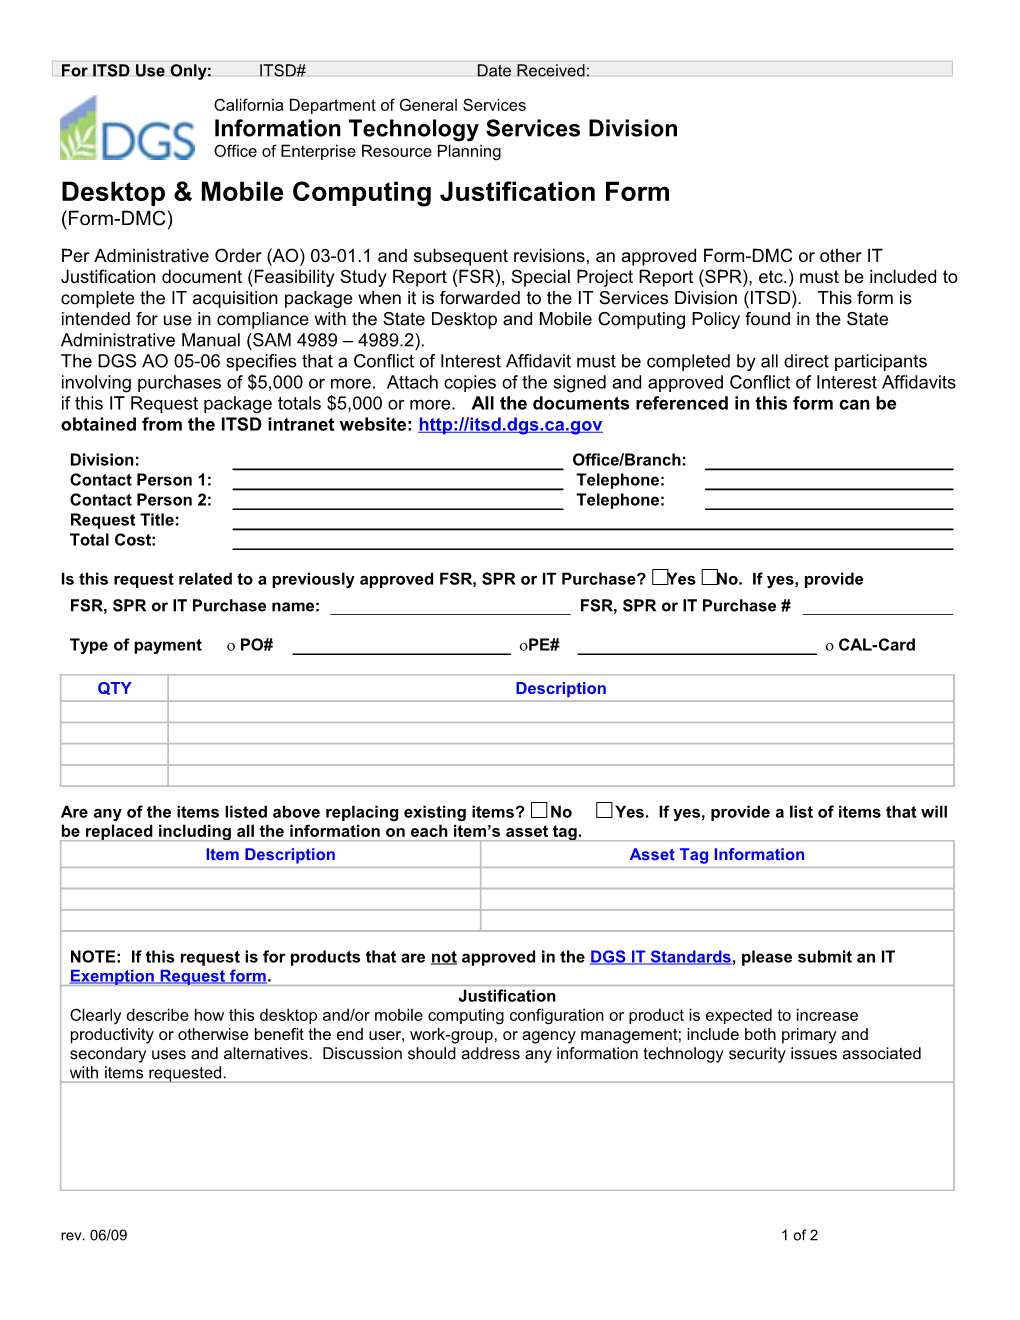 Desktop and Mobile Computing Justification Form